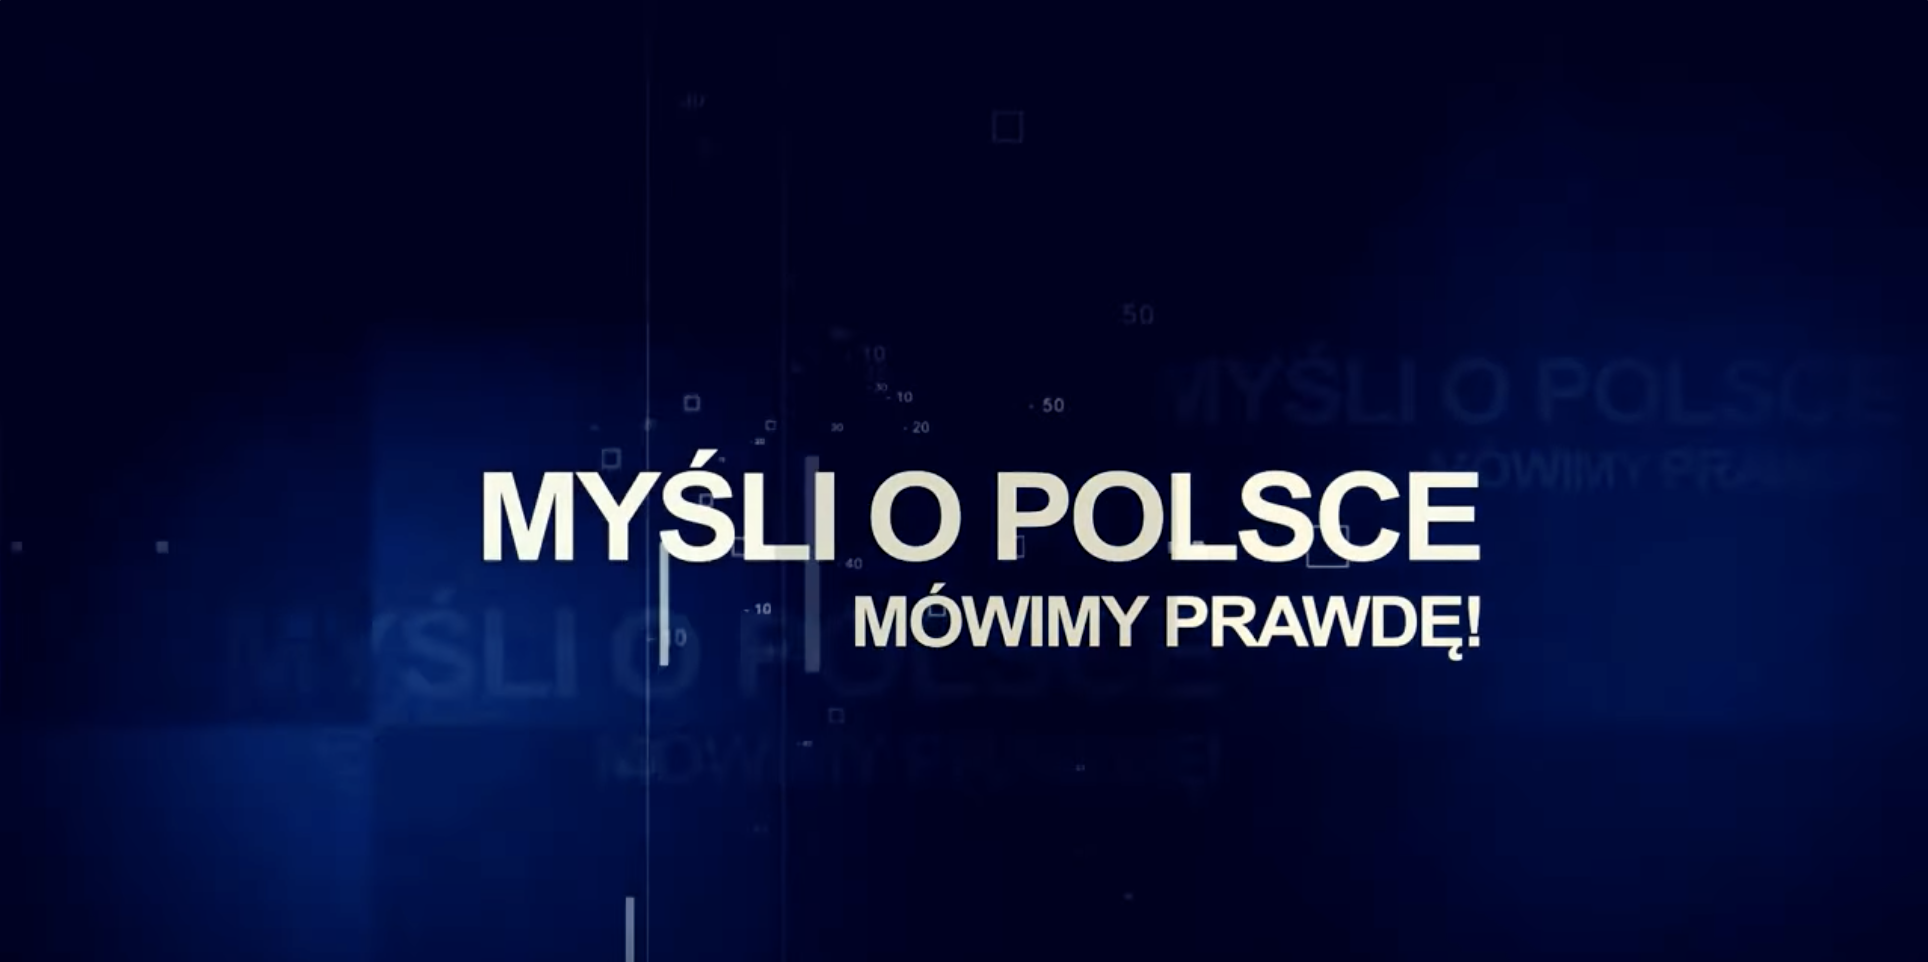 Заставка передачи Myśli o Polsce со слоганом «Мы говорим правду!» Скриншот YouTube